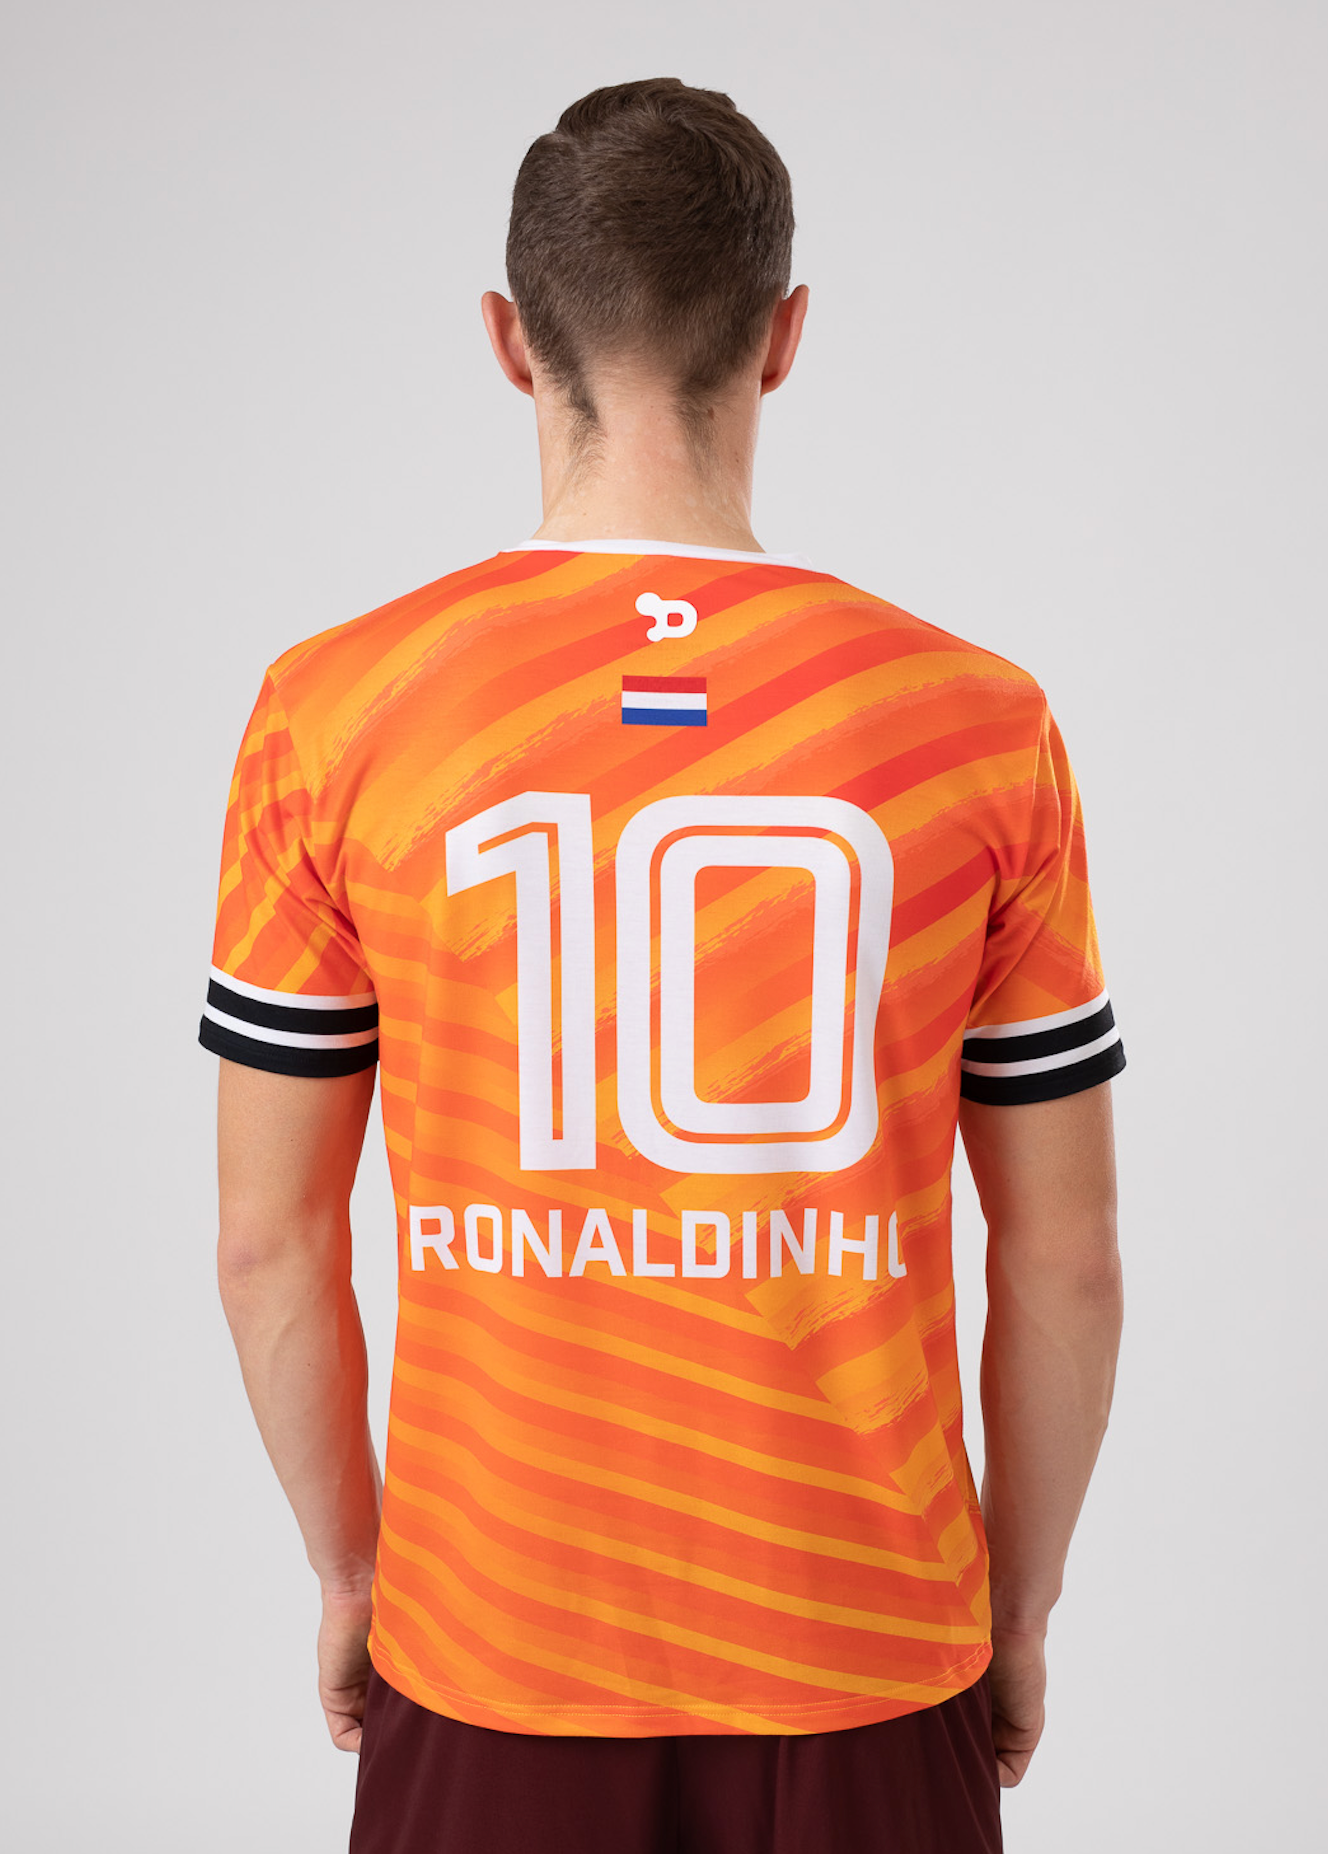 Ronaldinho Netherlands Jersey/Camisa